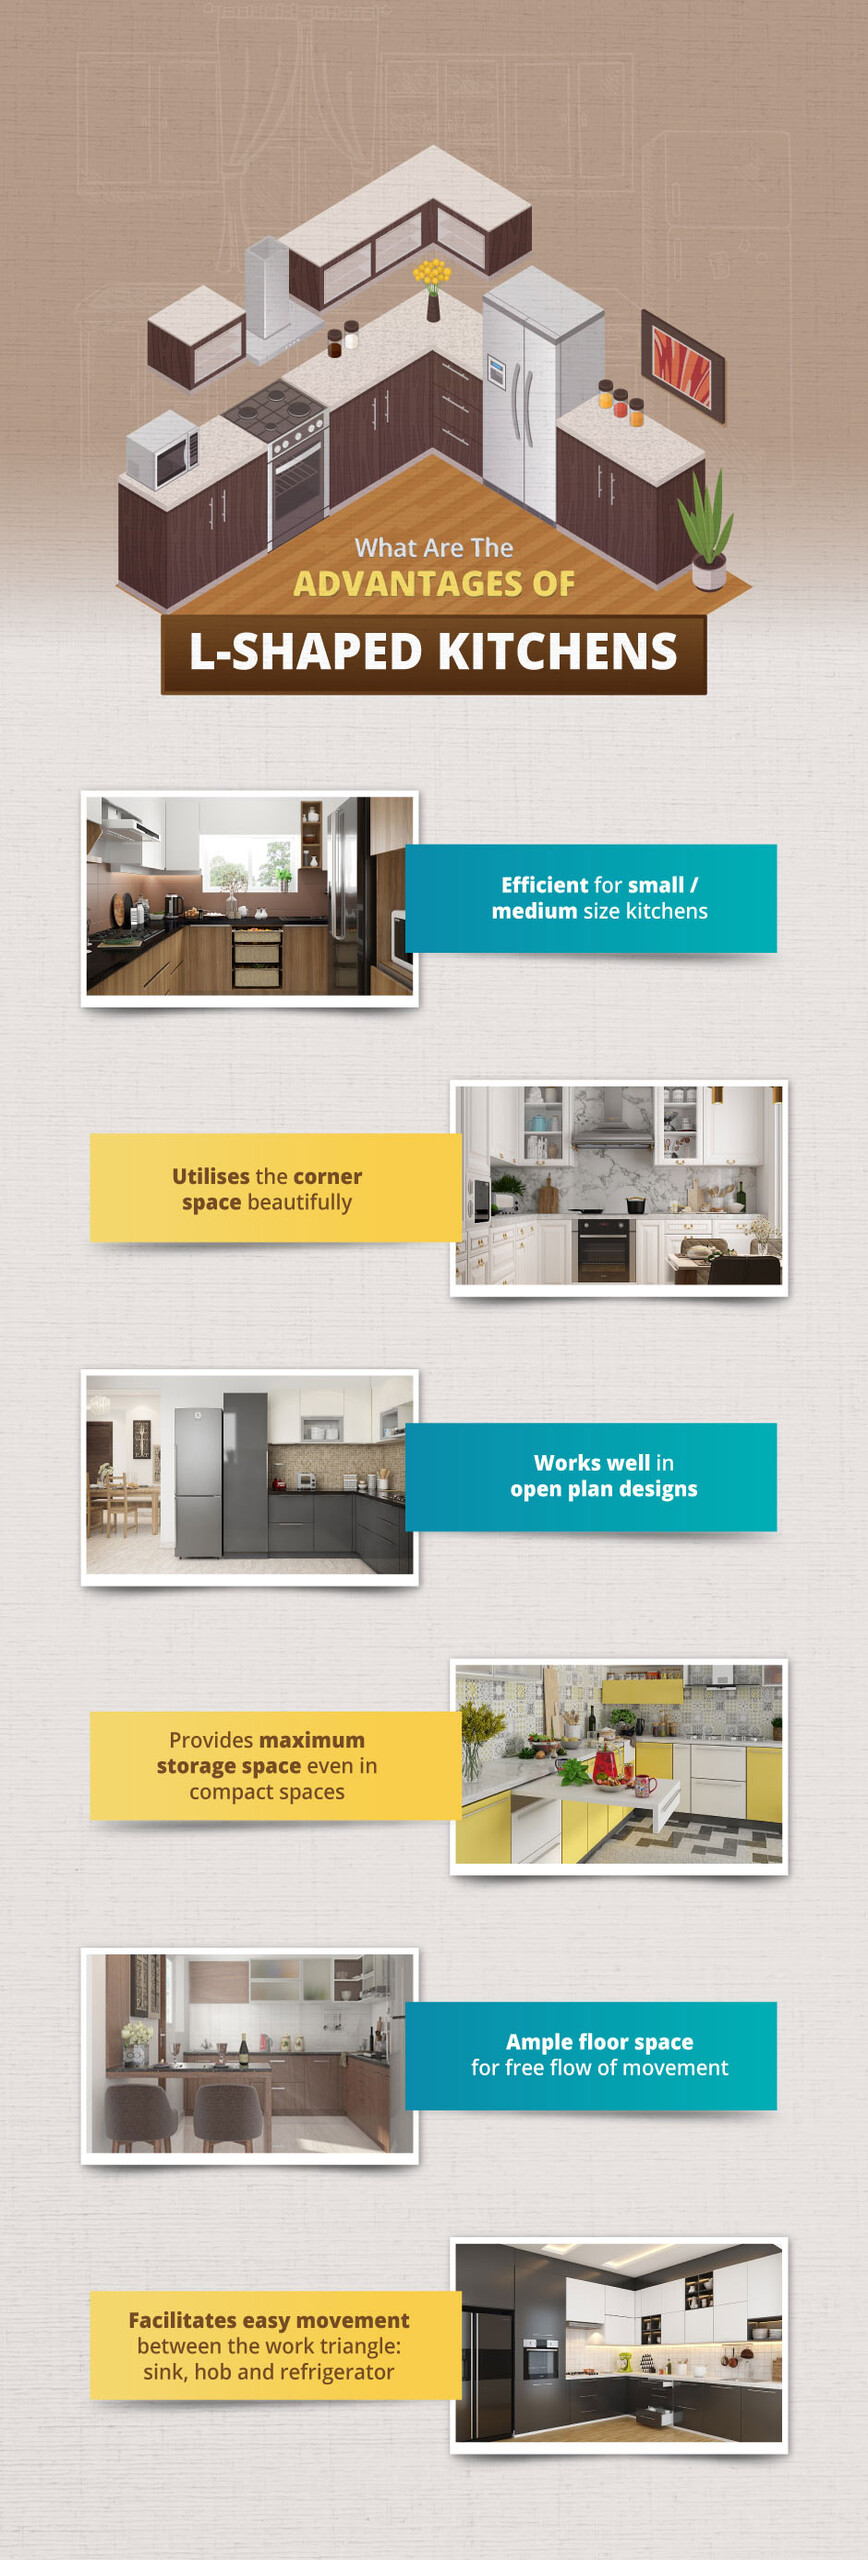 infographic advantages of l shaped kitchen